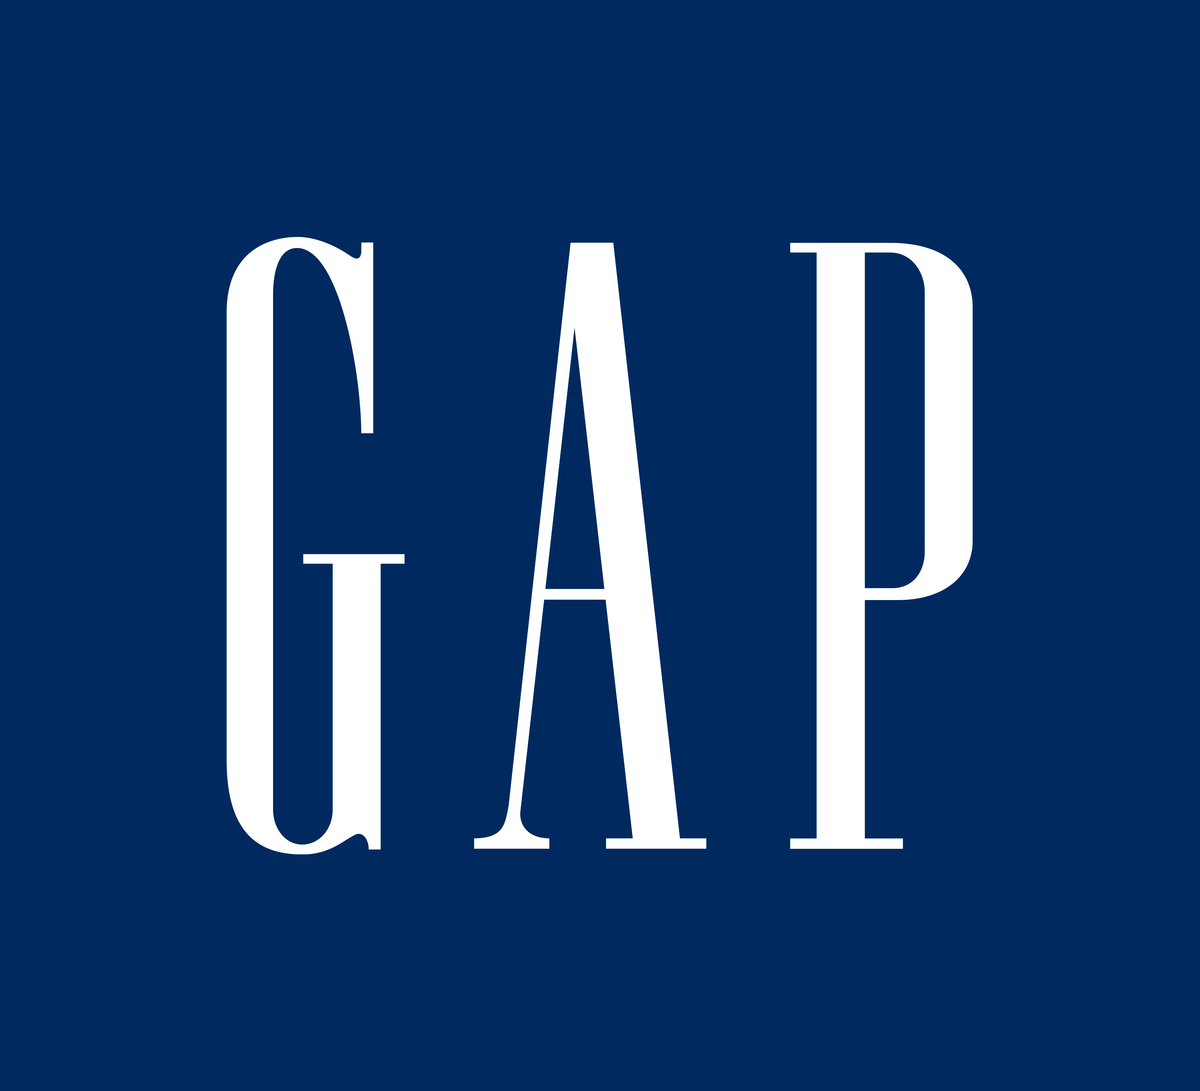 Le logo classique de Gap